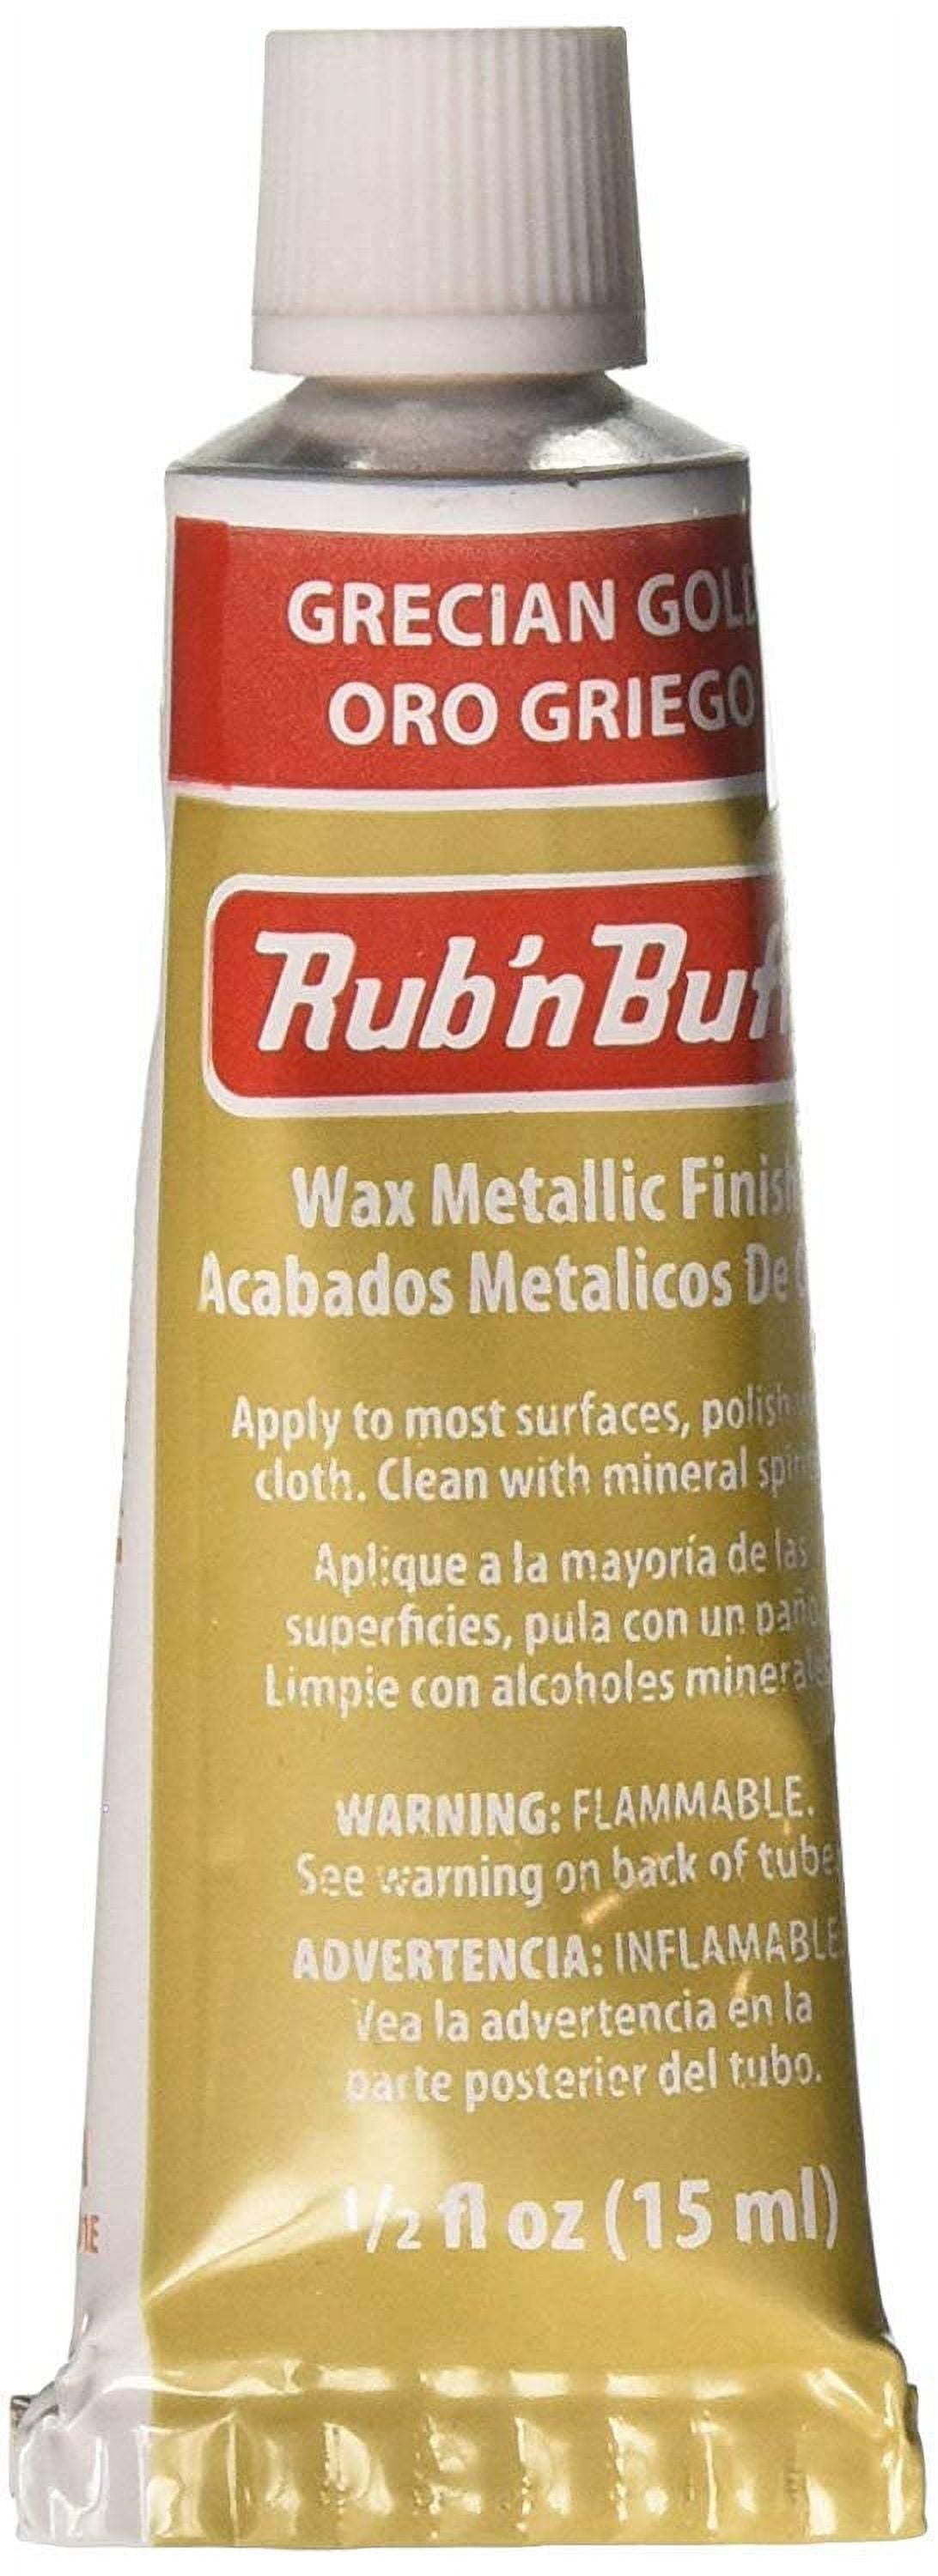 Original Rub 'n Buff Metallic Wax Finish .5oz Choice of Colors